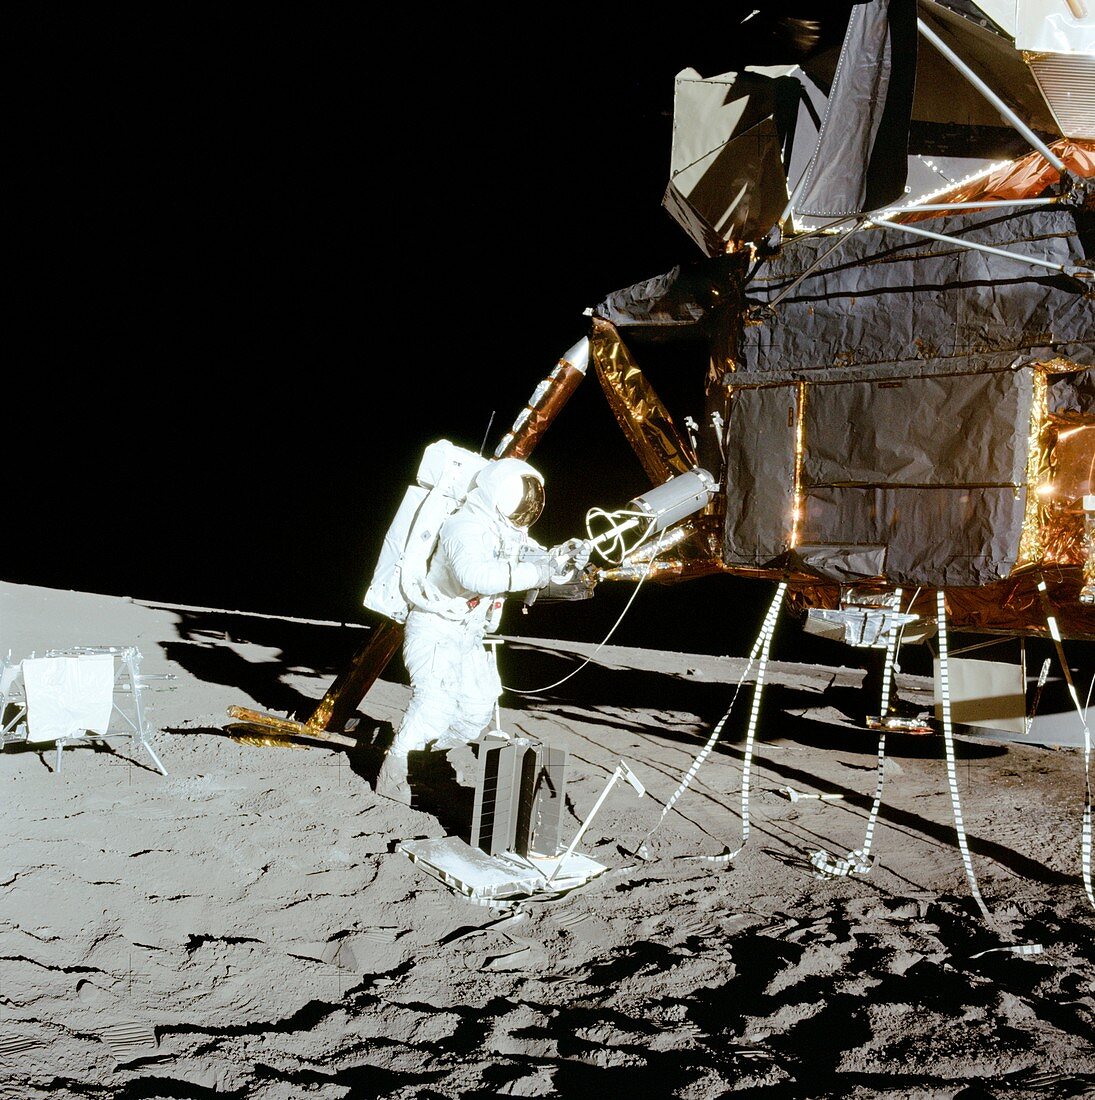 Apollo 12 astronaut changing fuel, 1969